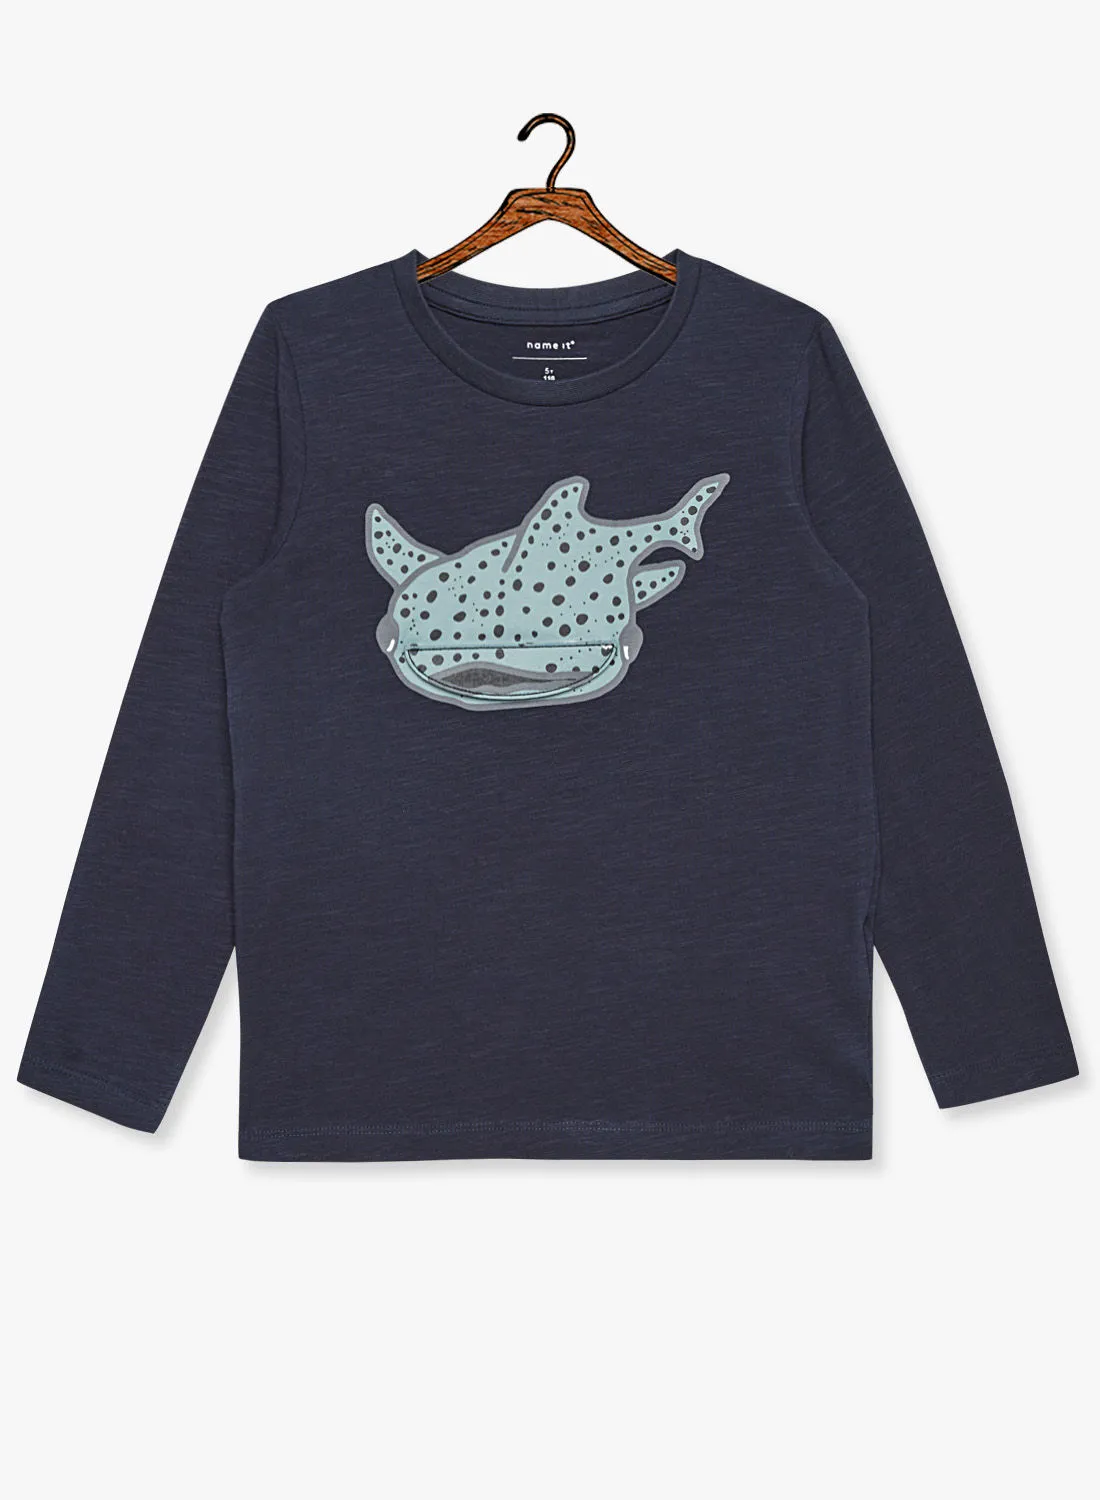 NAME IT Kids Fish Graphic Long Sleeve T-Shirt Navy